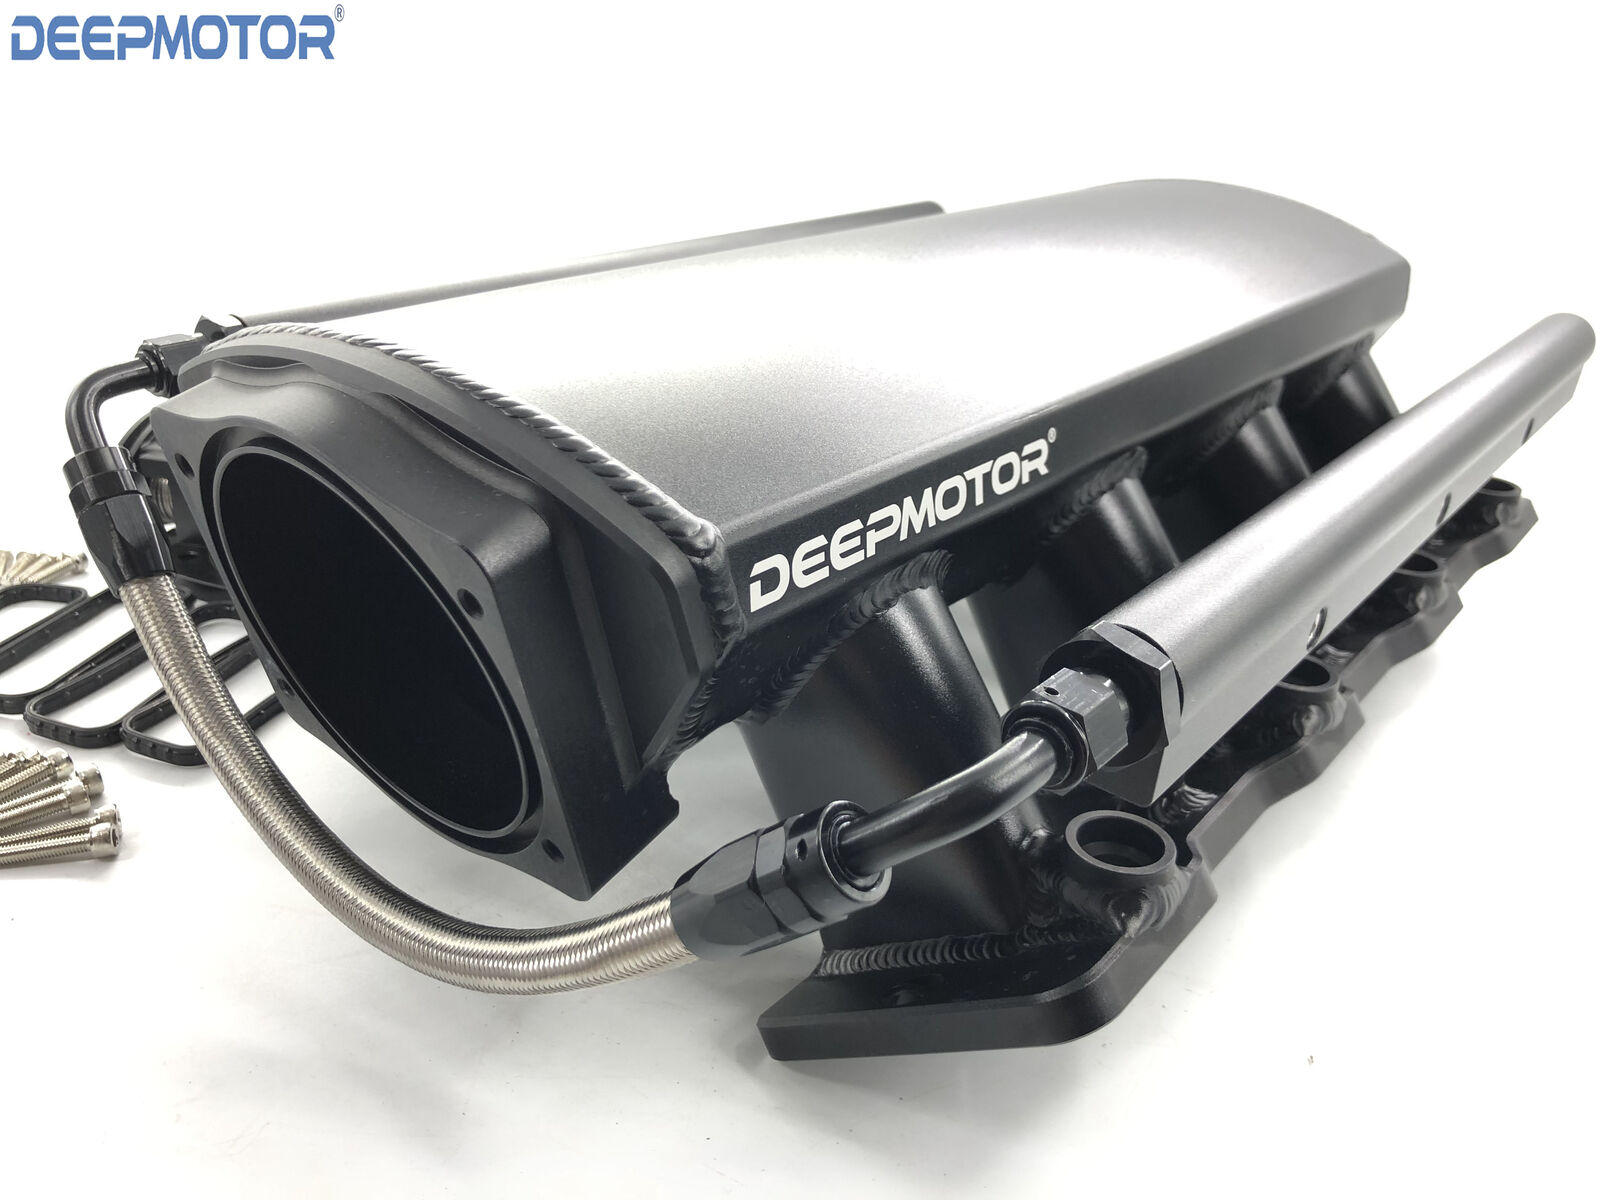 Deepmotor Low Profile LS3 L92 102 Fabricated Intake Manifold + Fuel Rails Black